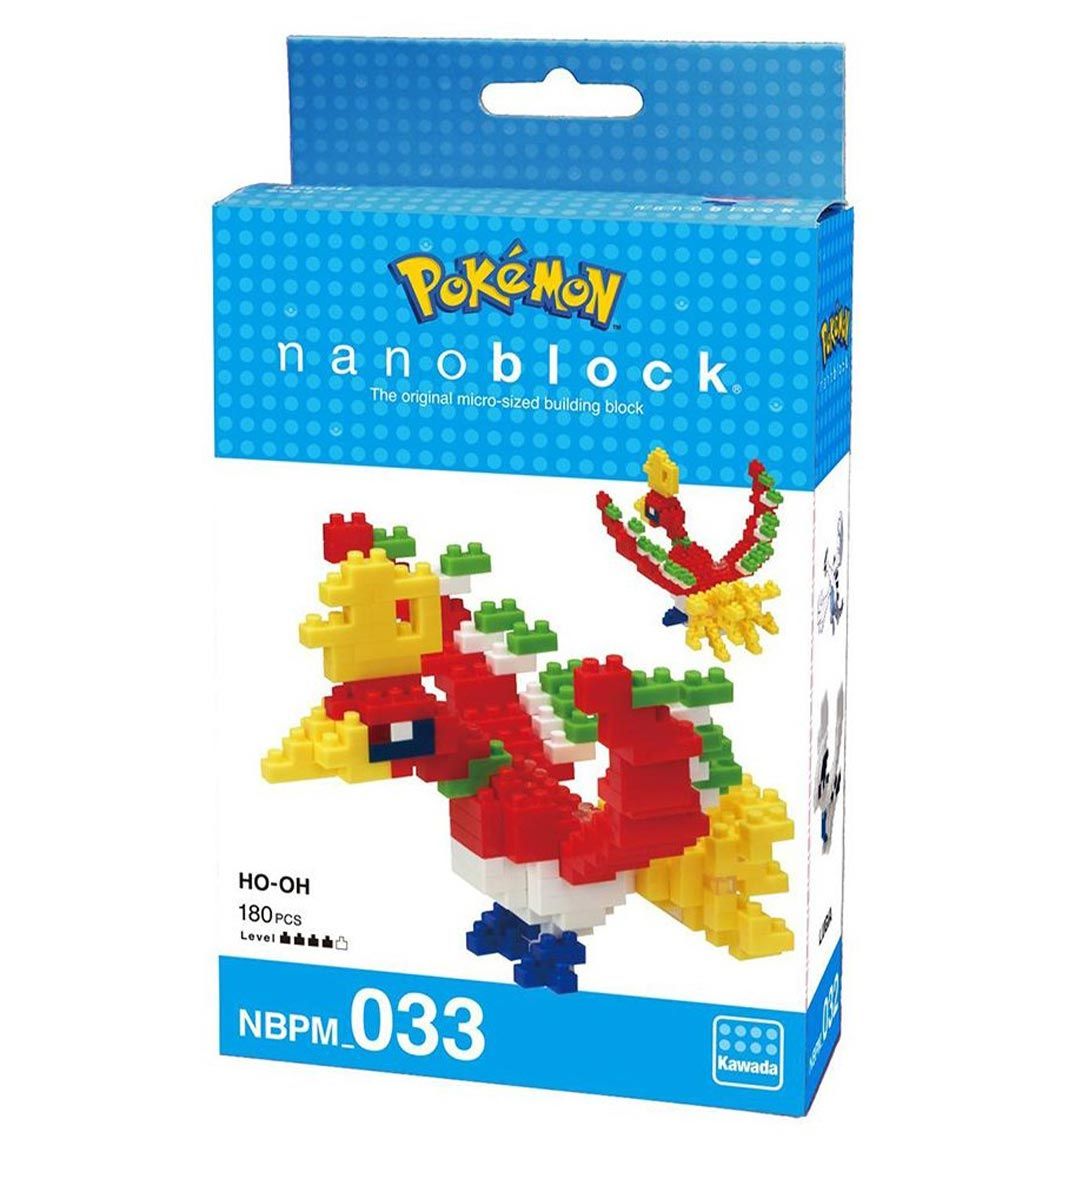 Pokémon x Nanoblock - Ho-Oh